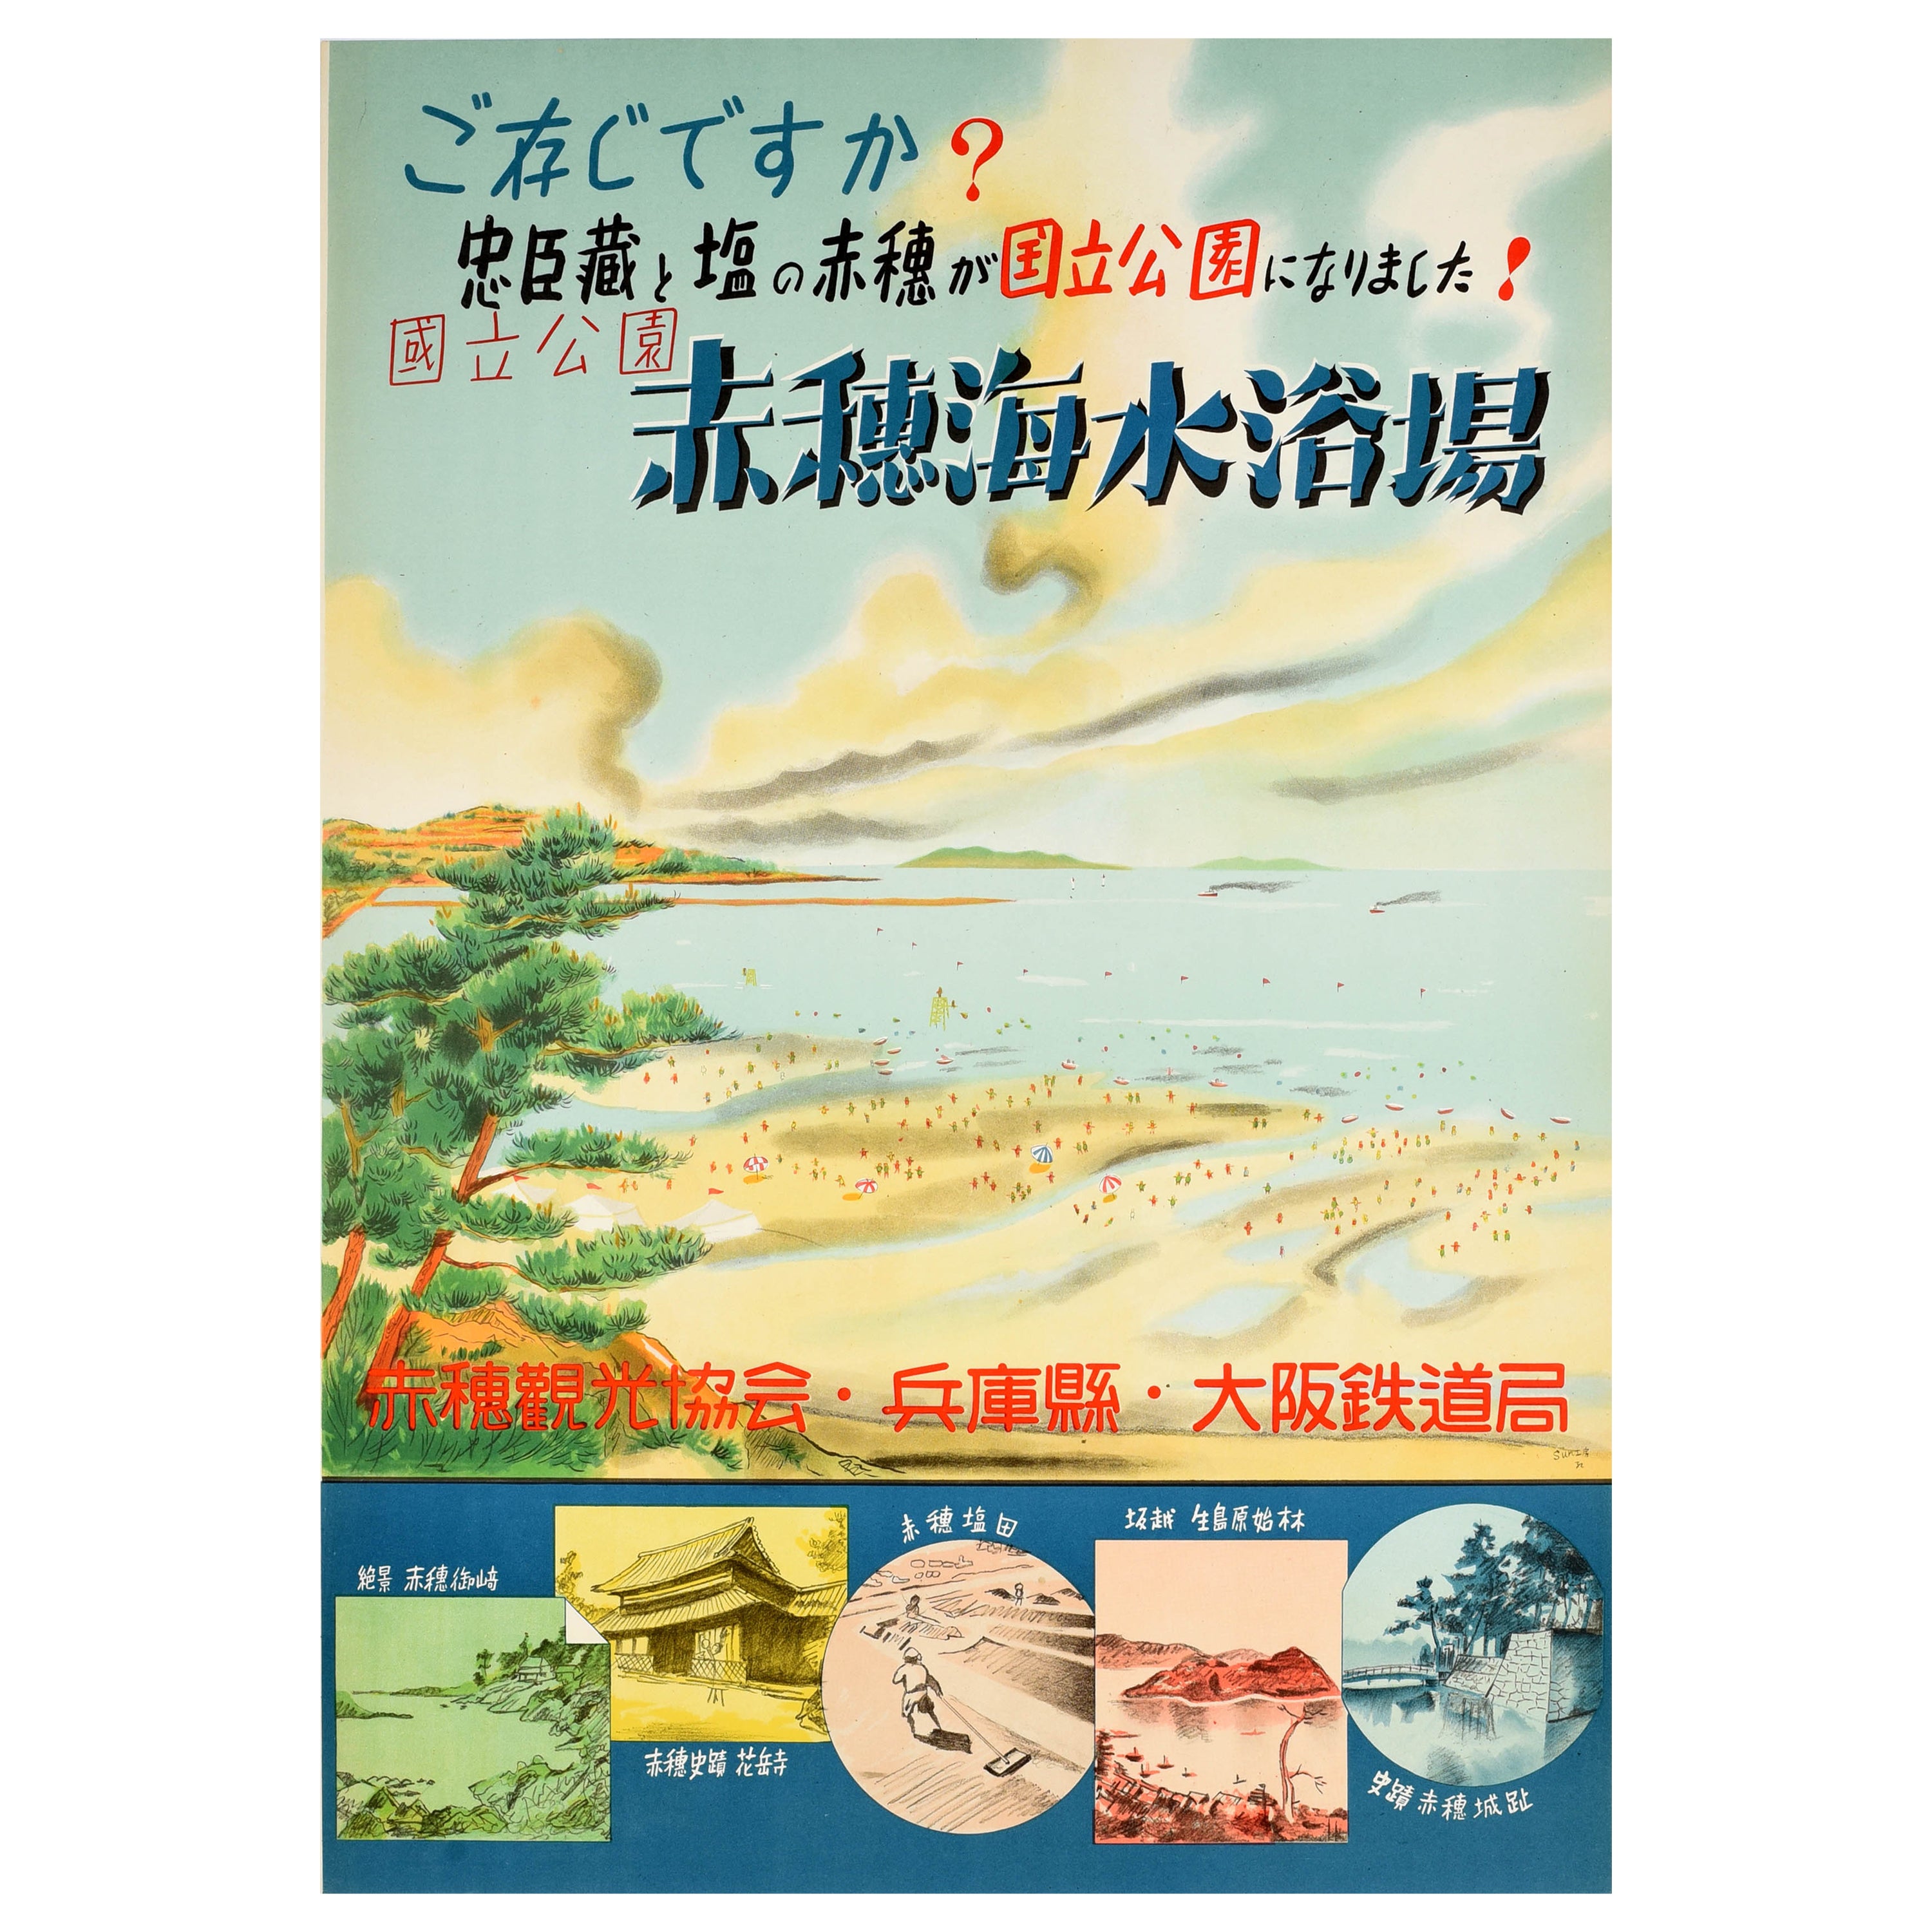 Original Vintage Travel Poster Fukuura Beach Japan Scenic Coast View Island Art For Sale